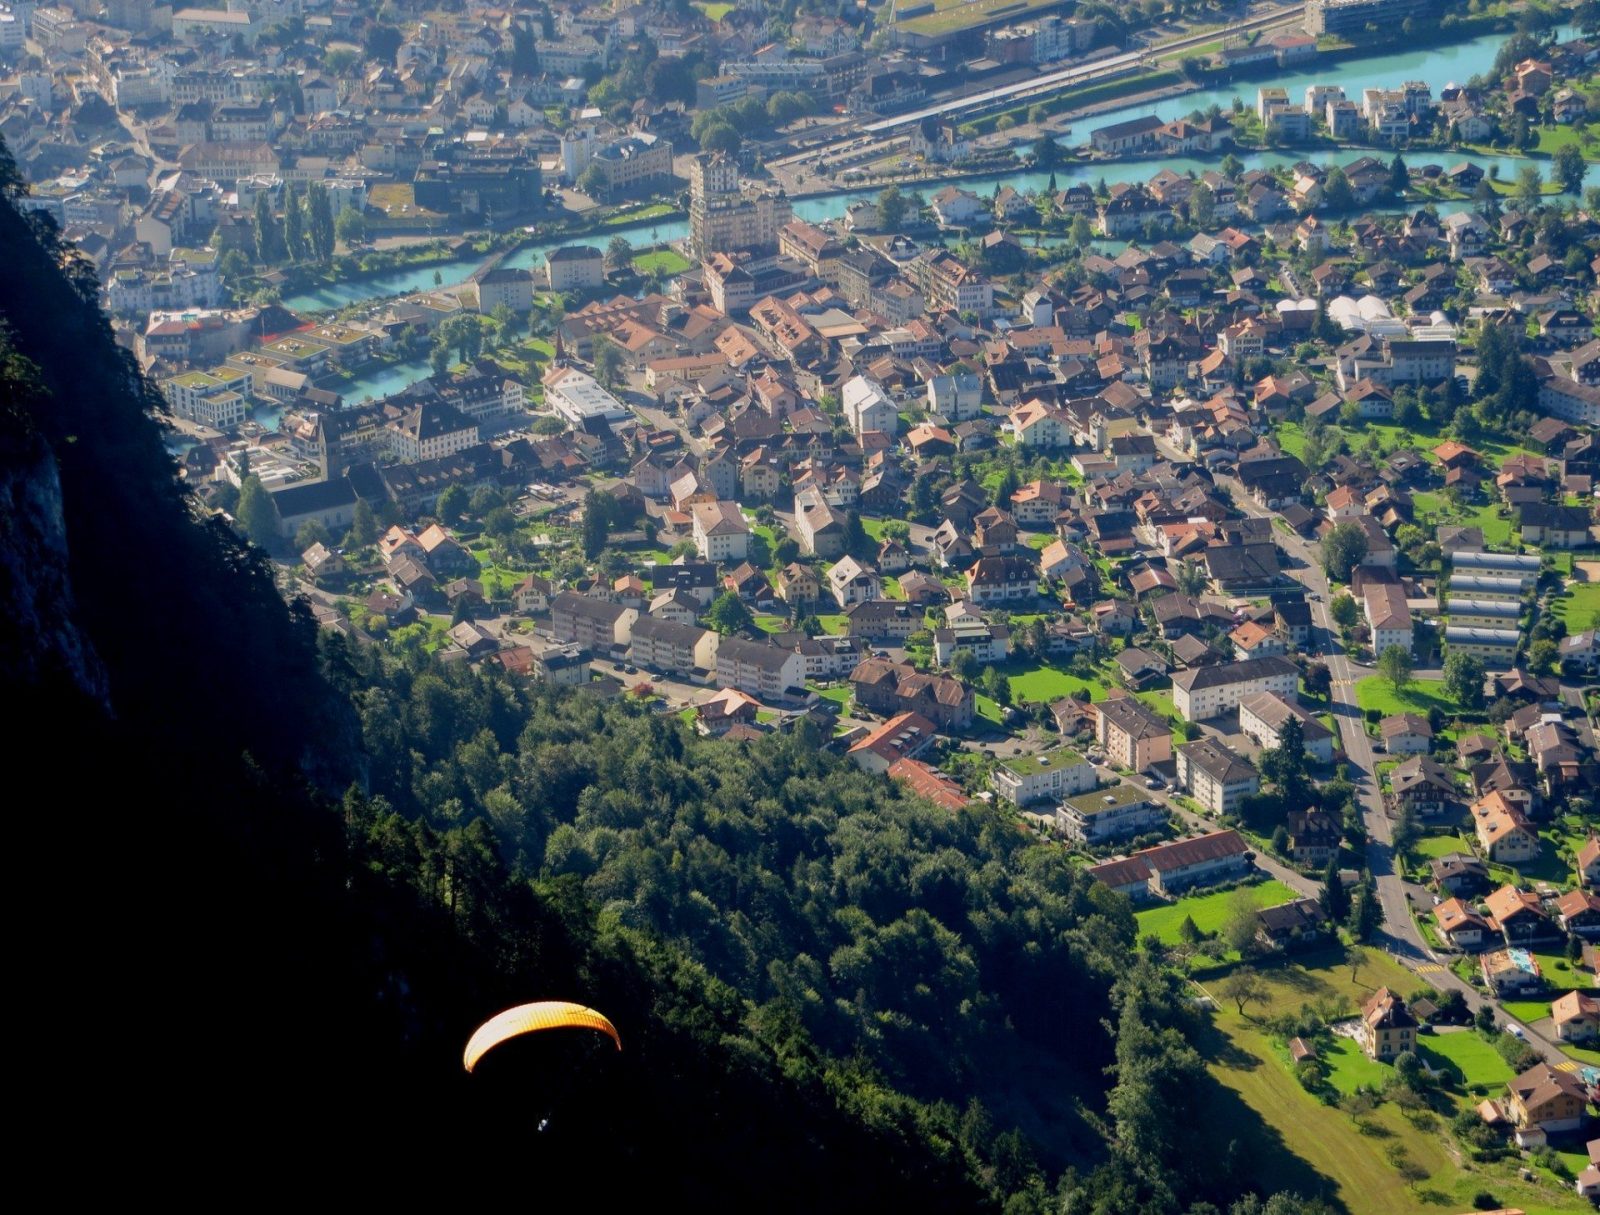 Paragliding over the town of Interlaken, Switzerland.